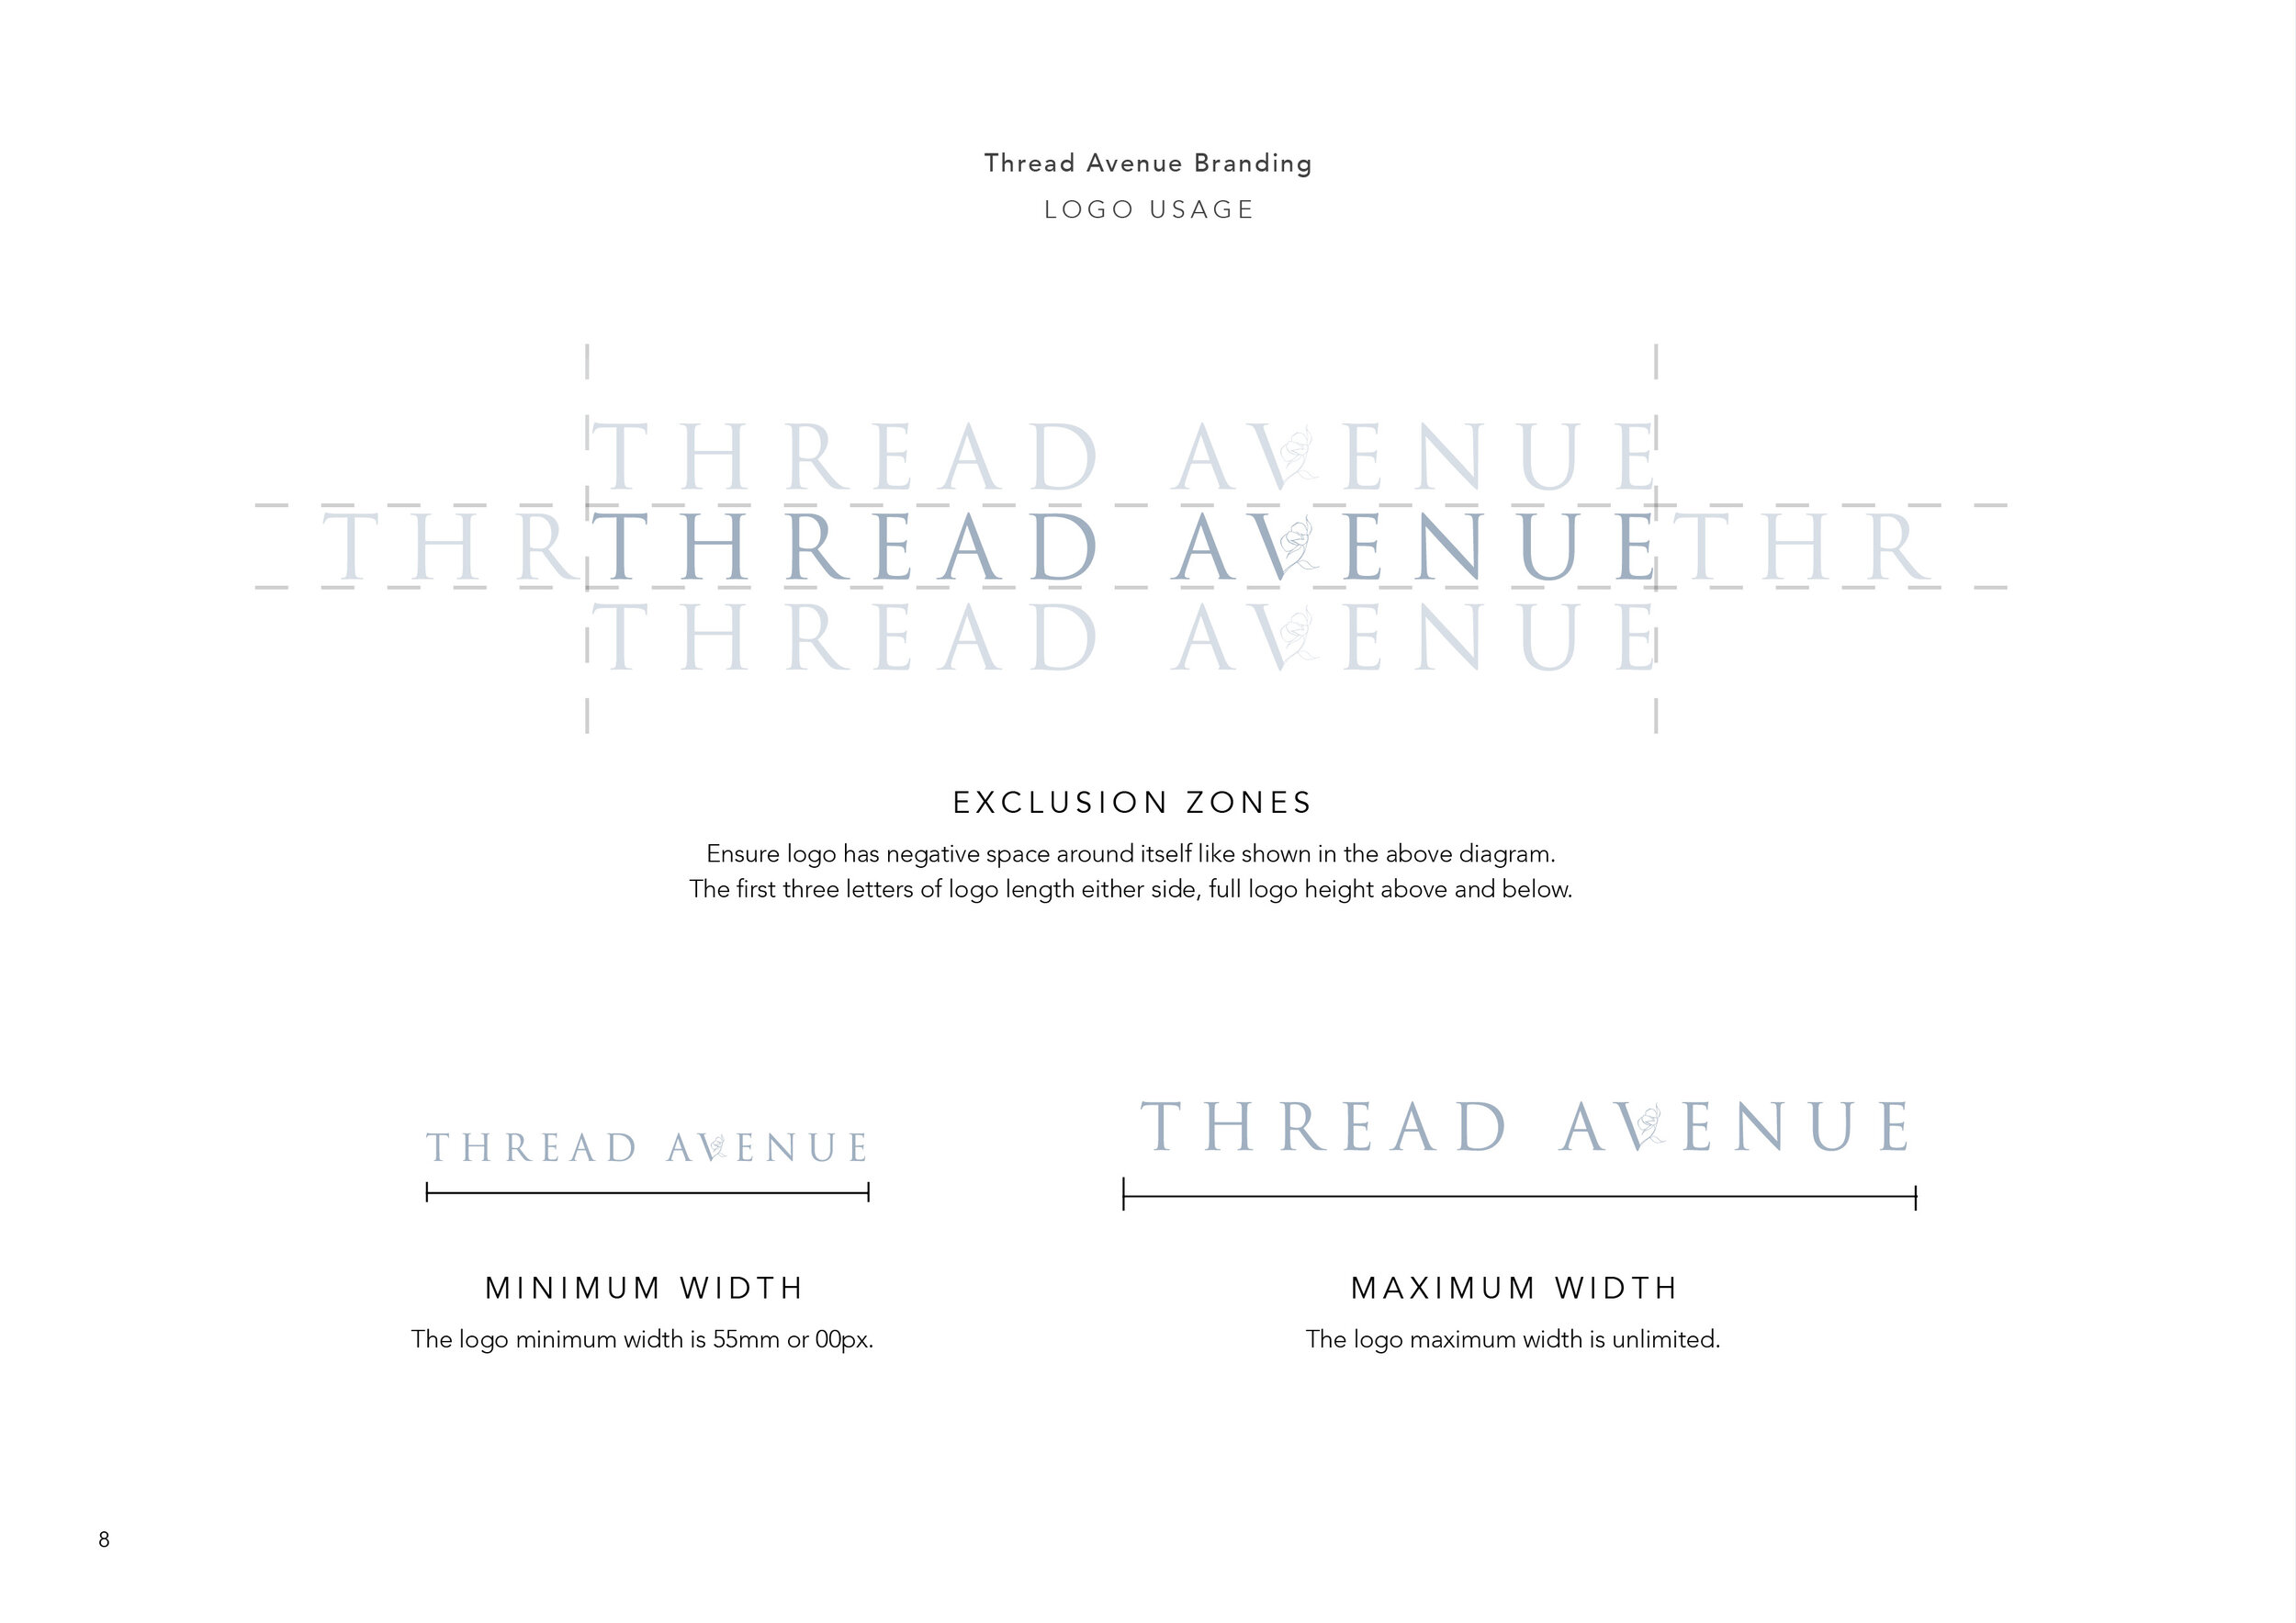 Thread Avenue Brand Guidelines8.jpg